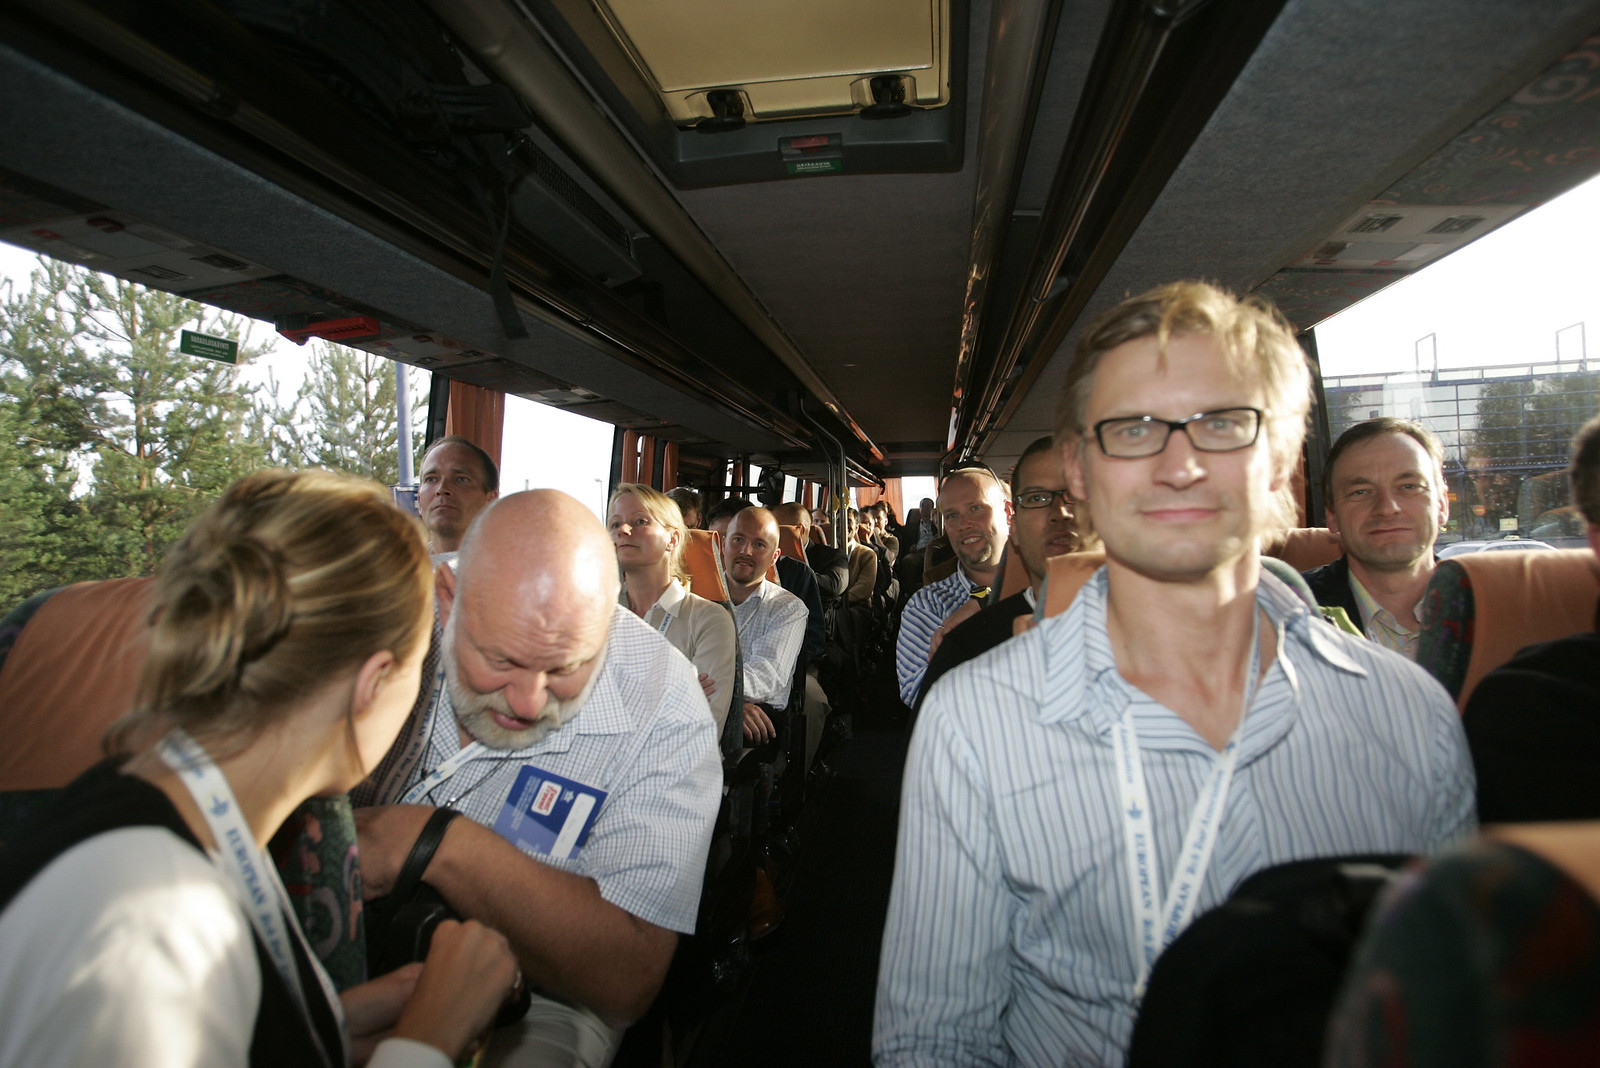 1 Bus Transfer to Oulu